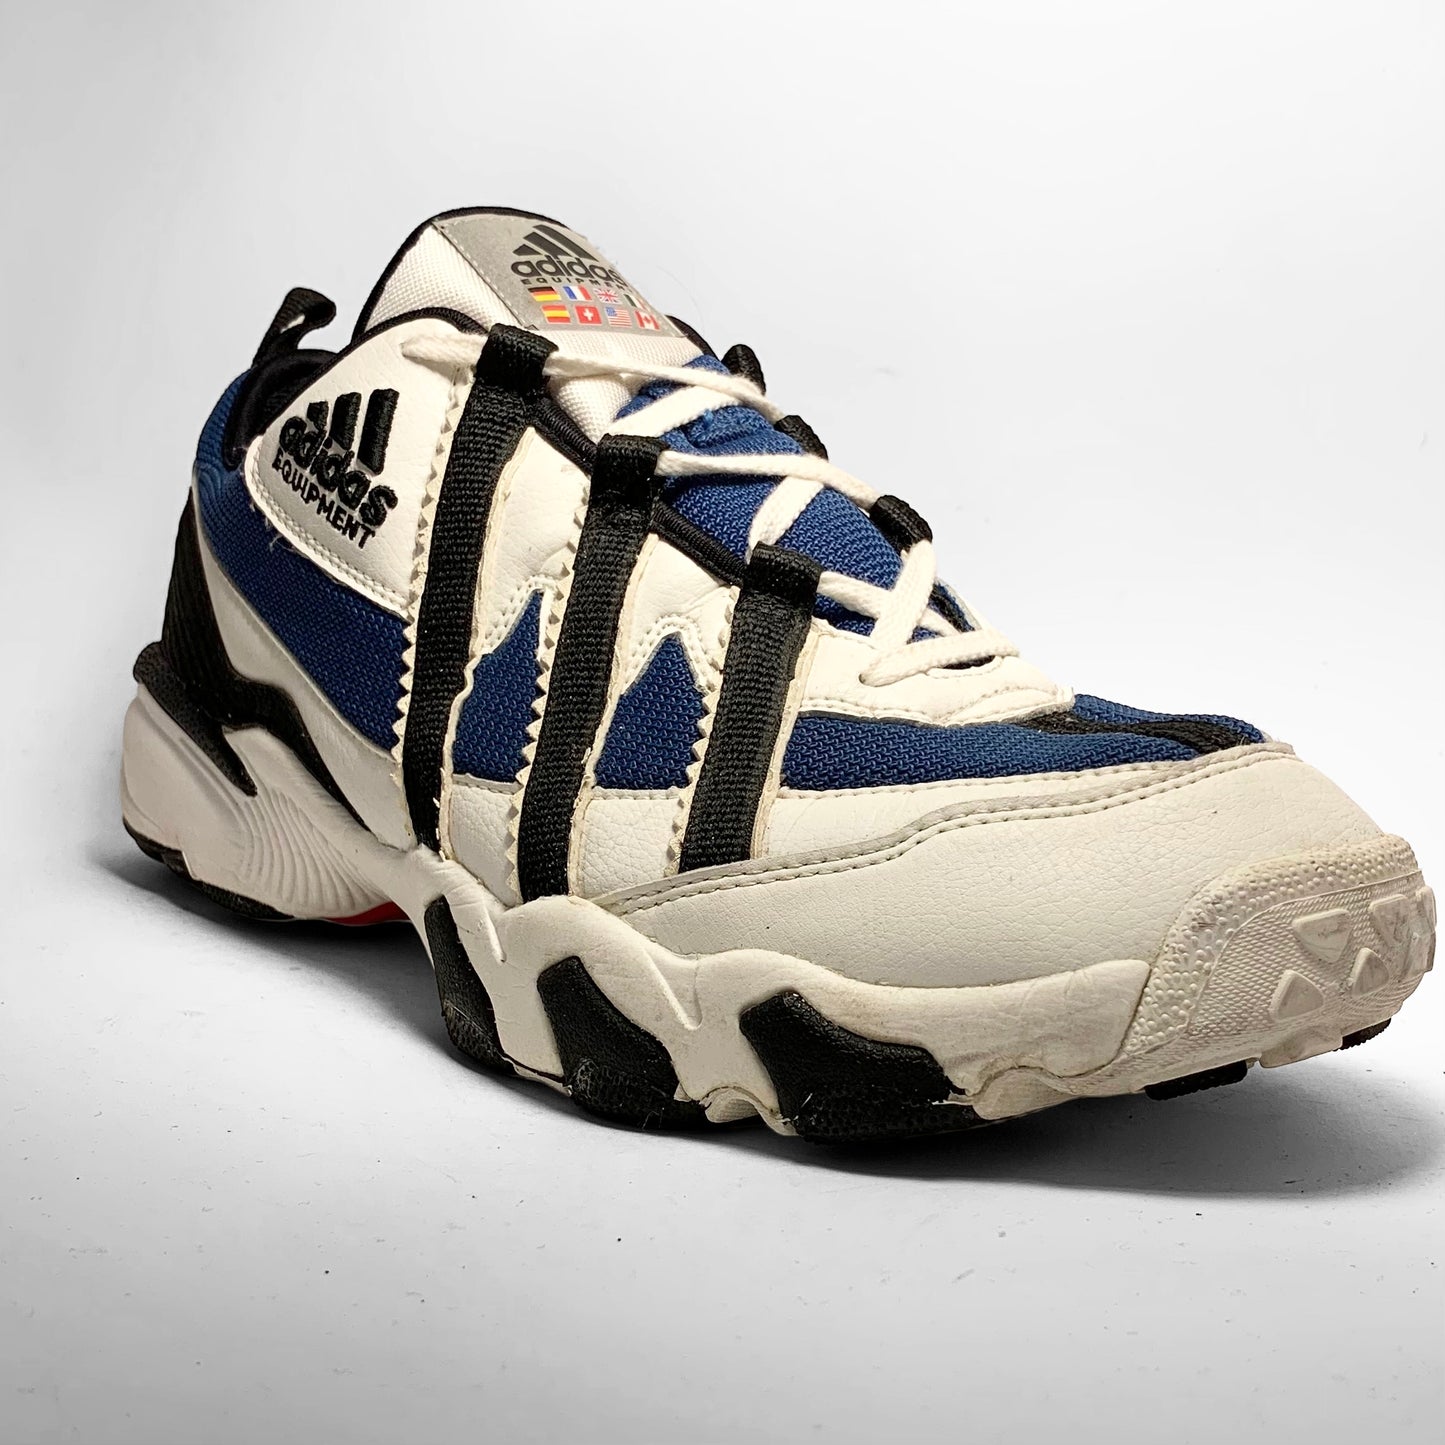 Adidas Tennis EQT (1996)